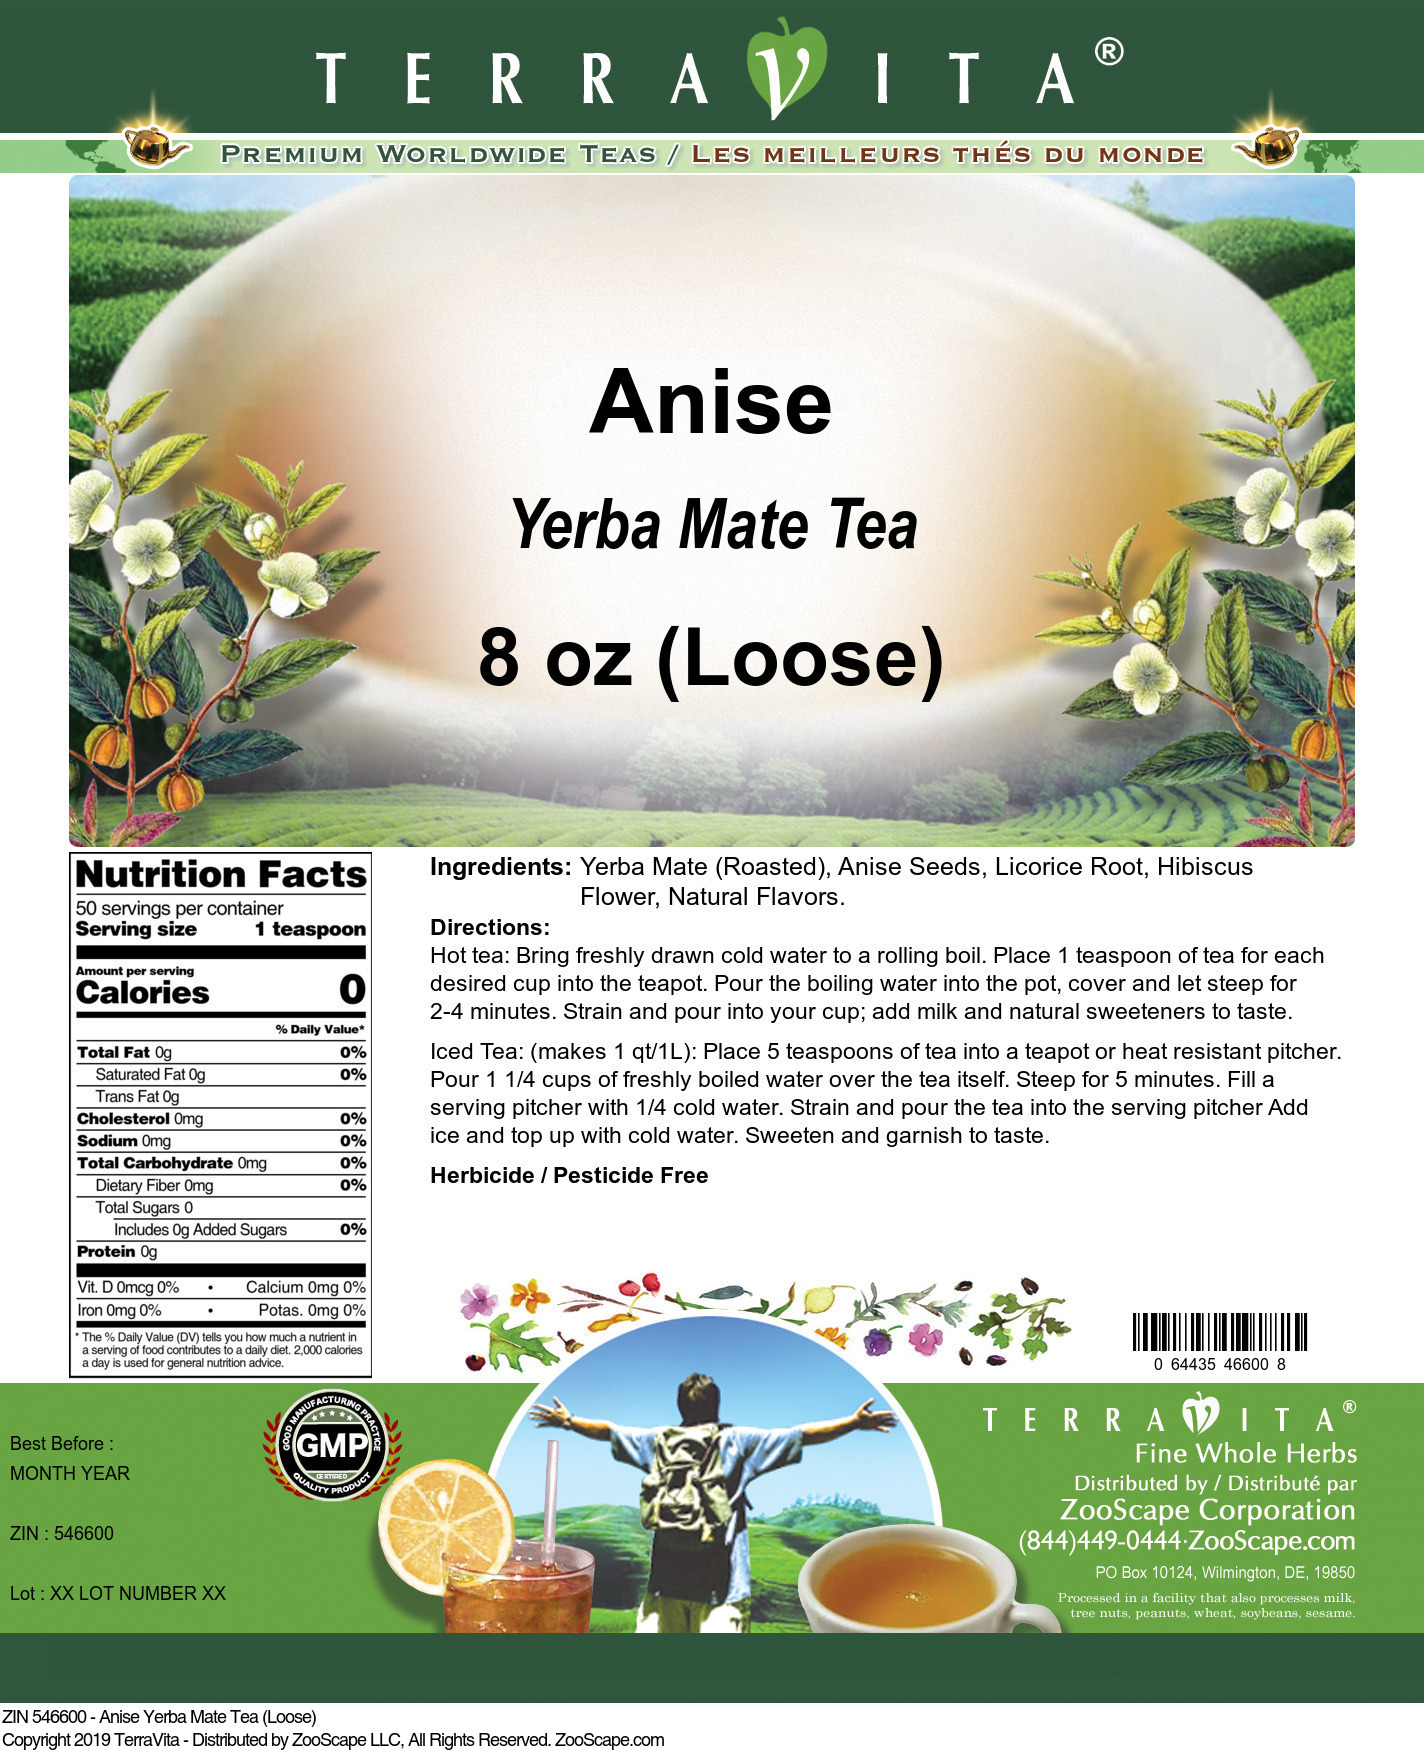 Anise Yerba Mate Tea (Loose) - Label